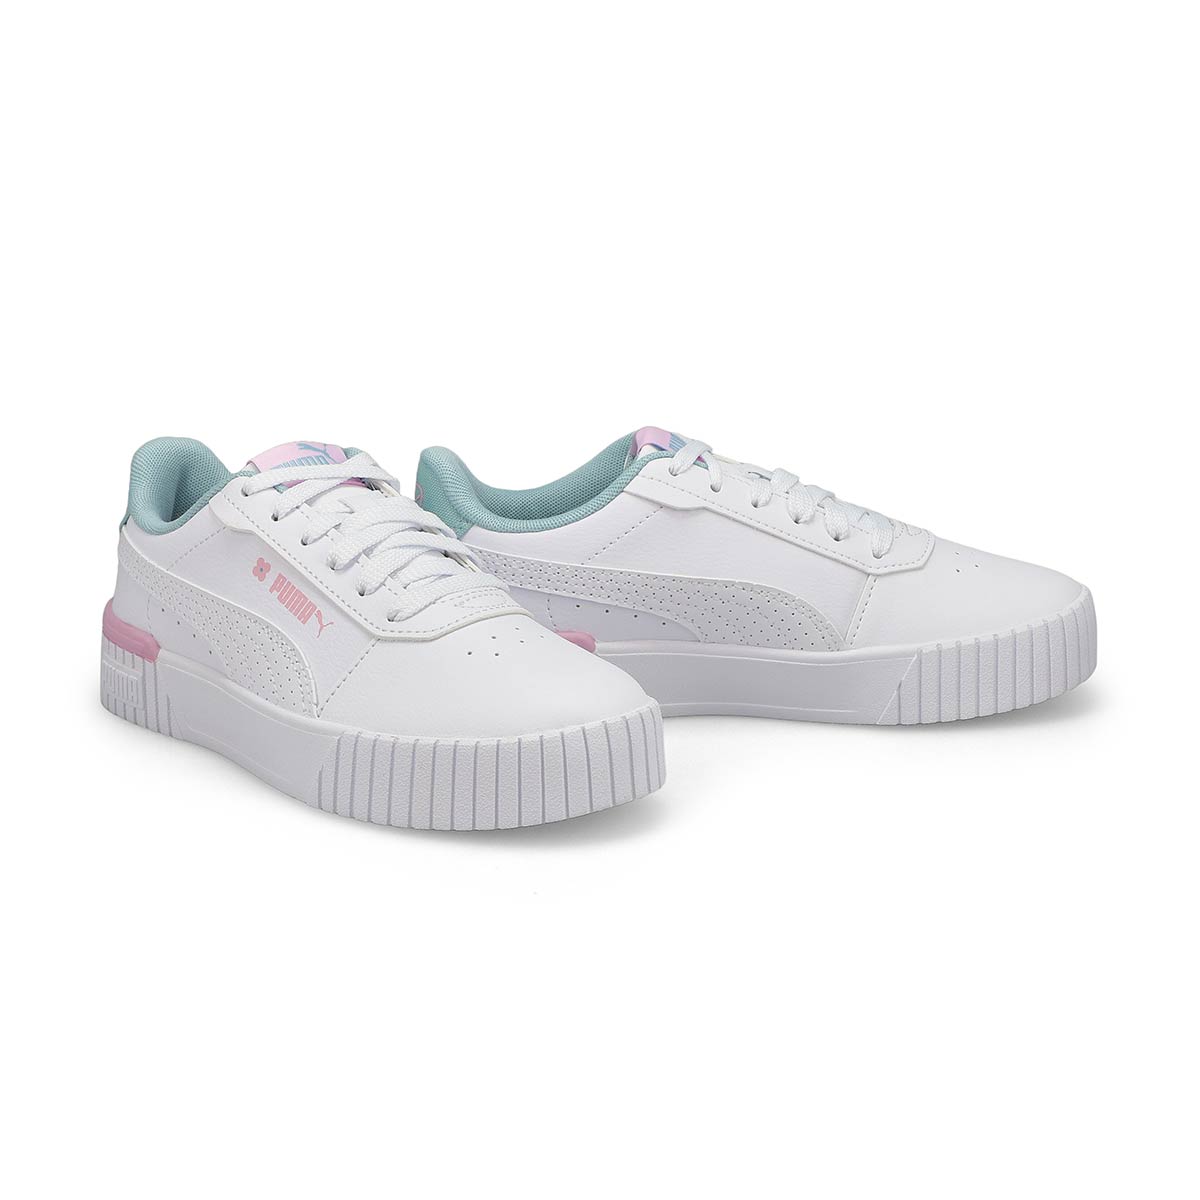 Girls Carina 2.0 Tropical Jr Sneaker - White/Turquoise/Grape